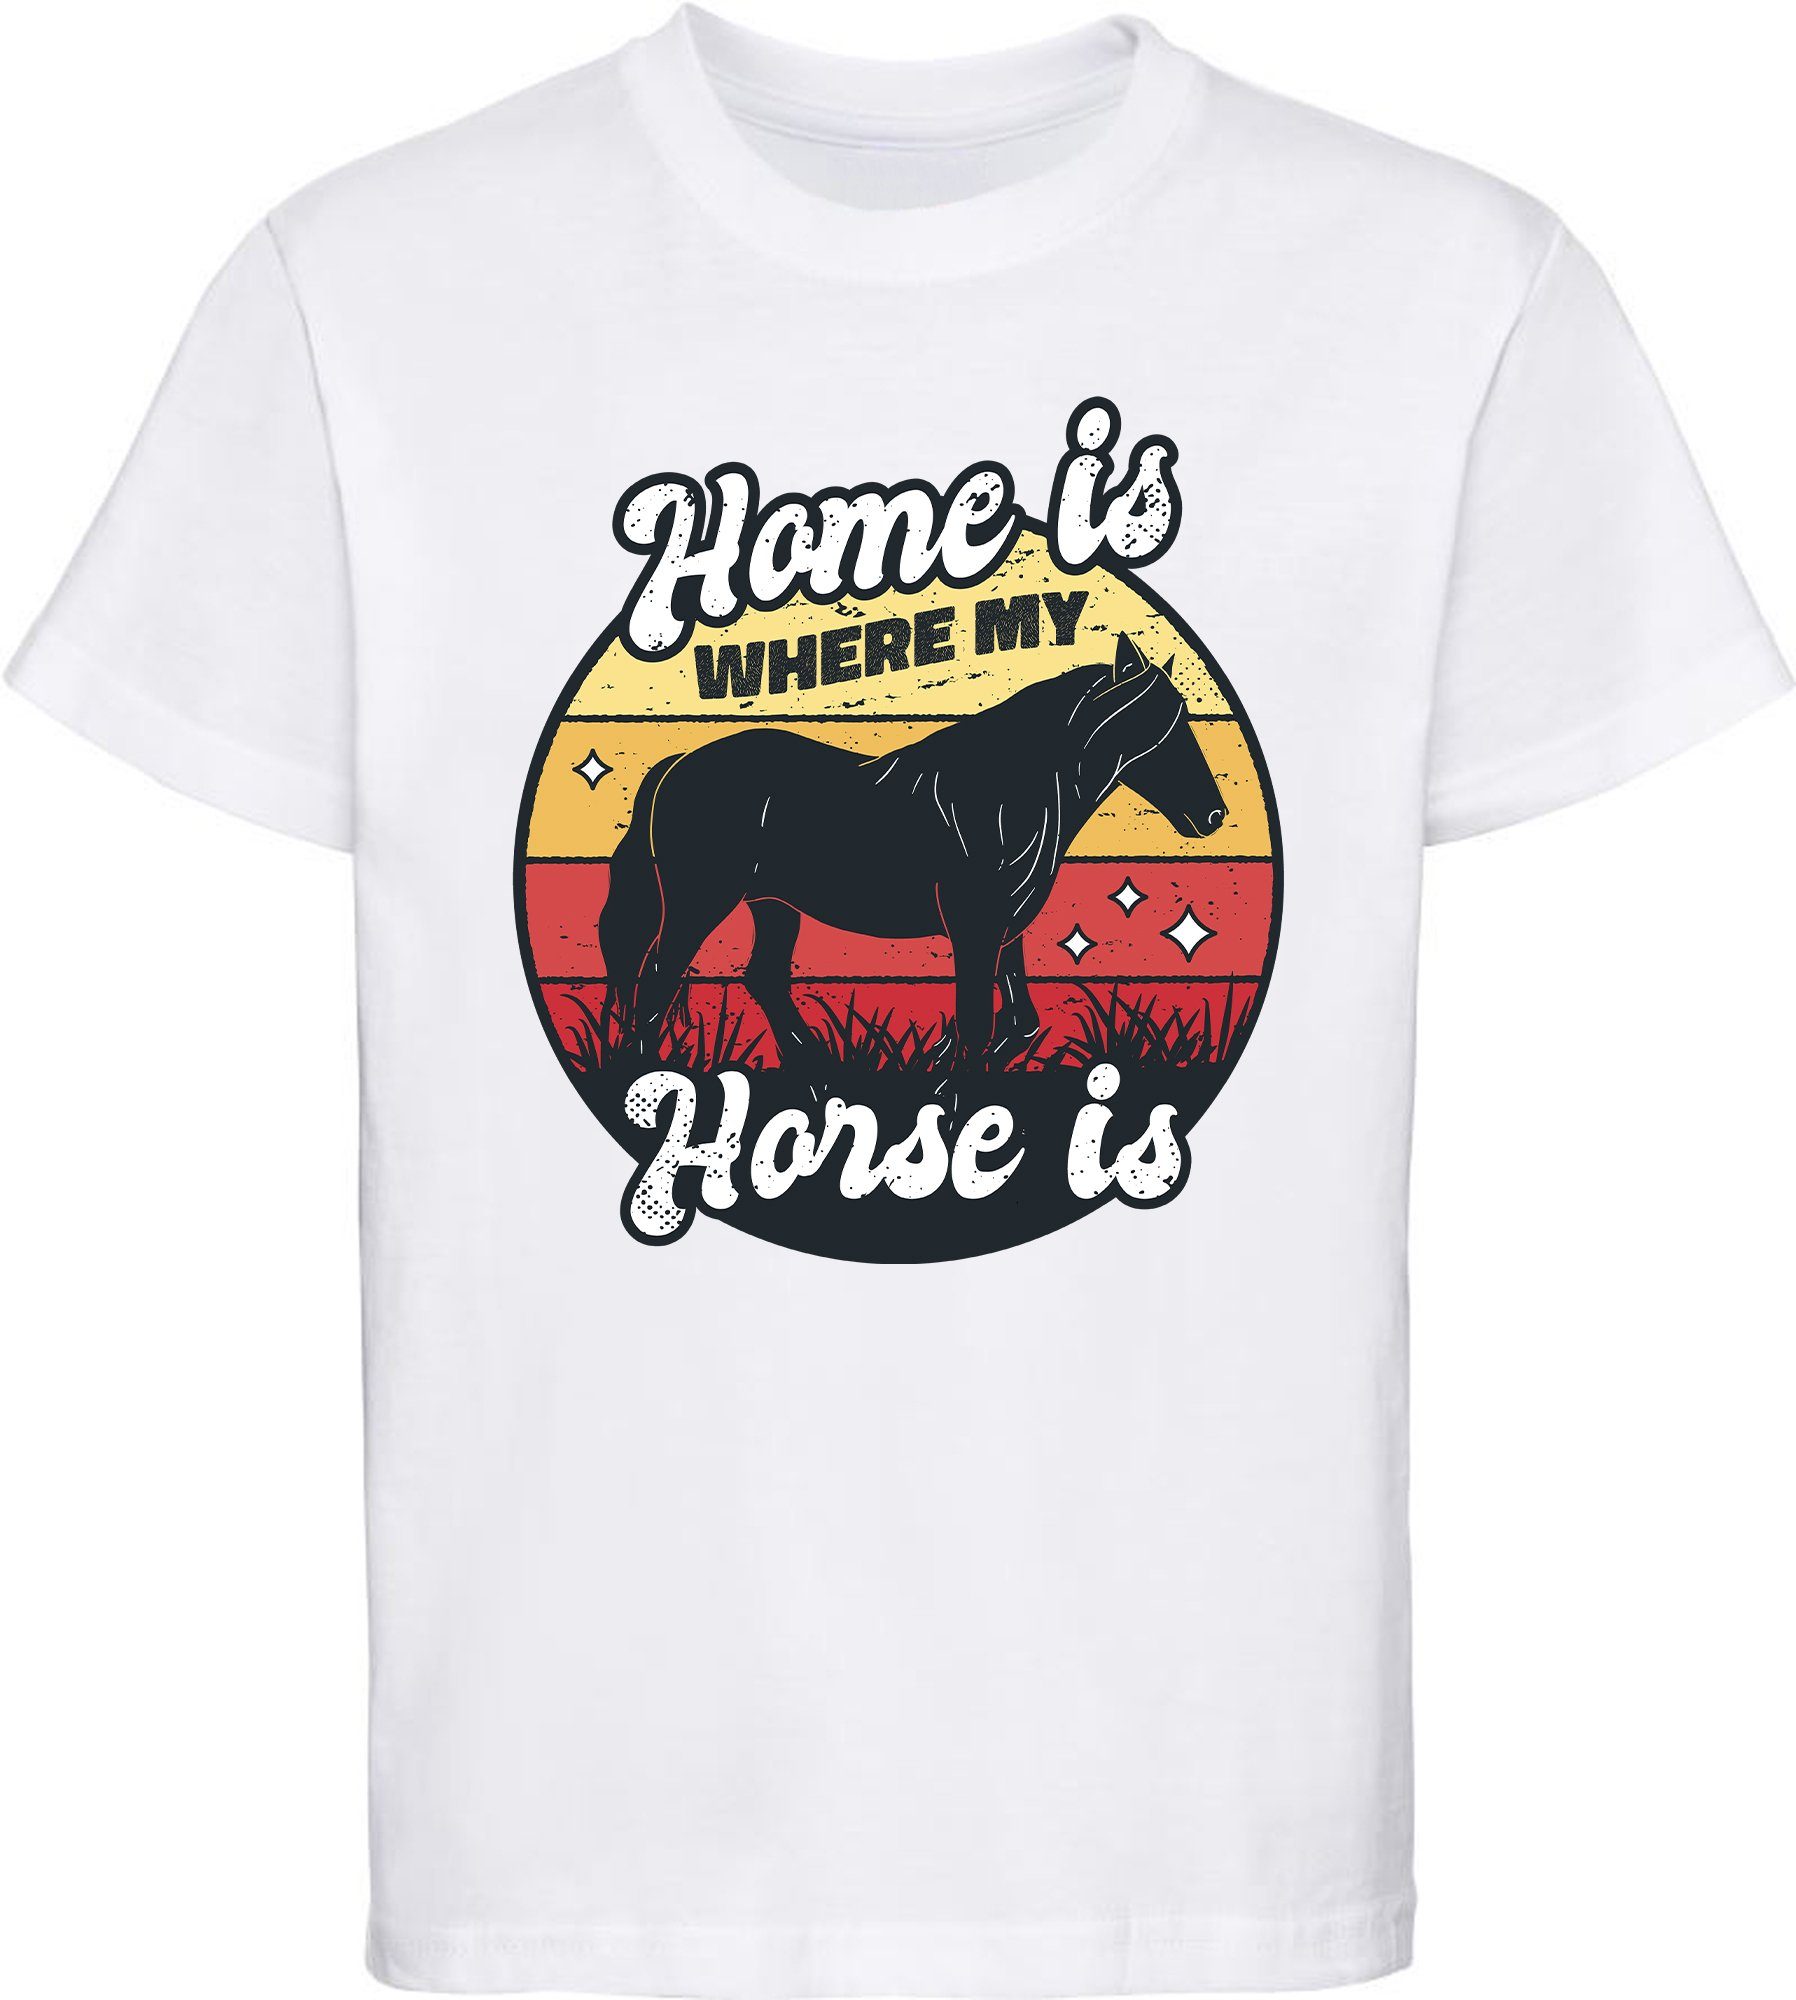 MyDesign24 Print-Shirt bedrucktes Mädchen T-Shirt - Home is where my horse is Baumwollshirt mit Aufdruck, i156 weiss